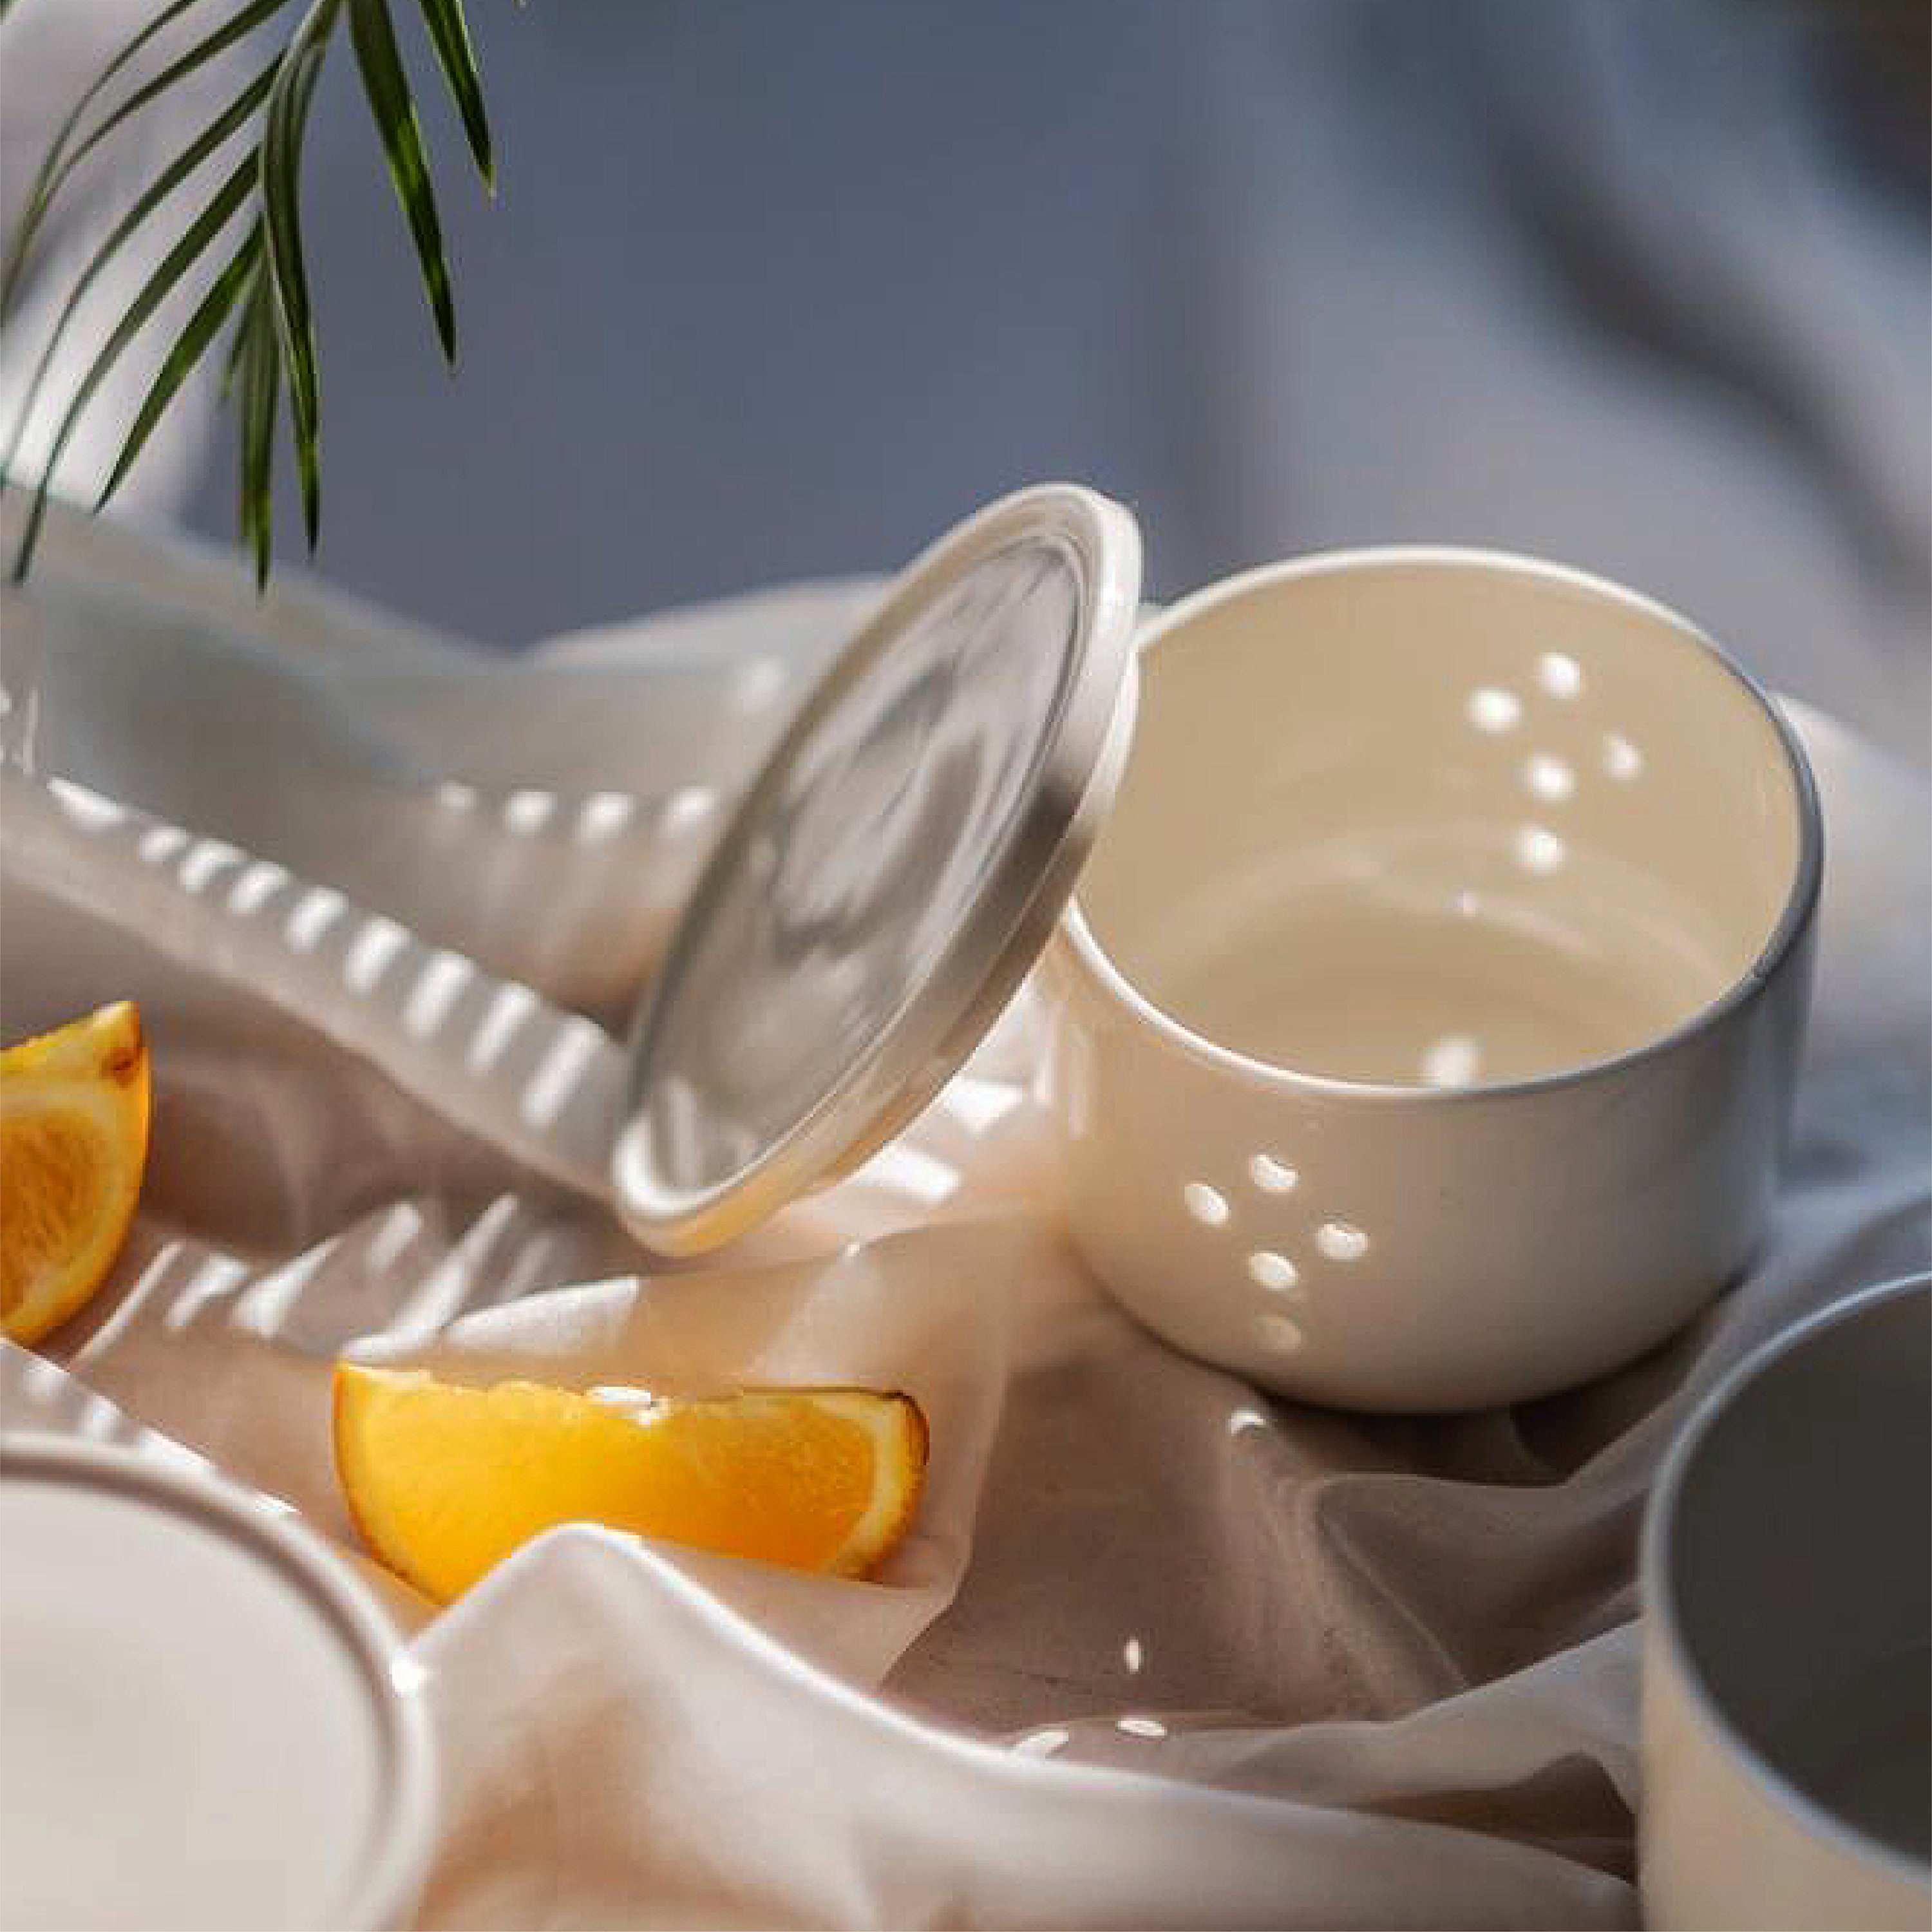 Handmade Ceramic Garlic Keeper by Sawyer Ceramics, Stoneware on Food52